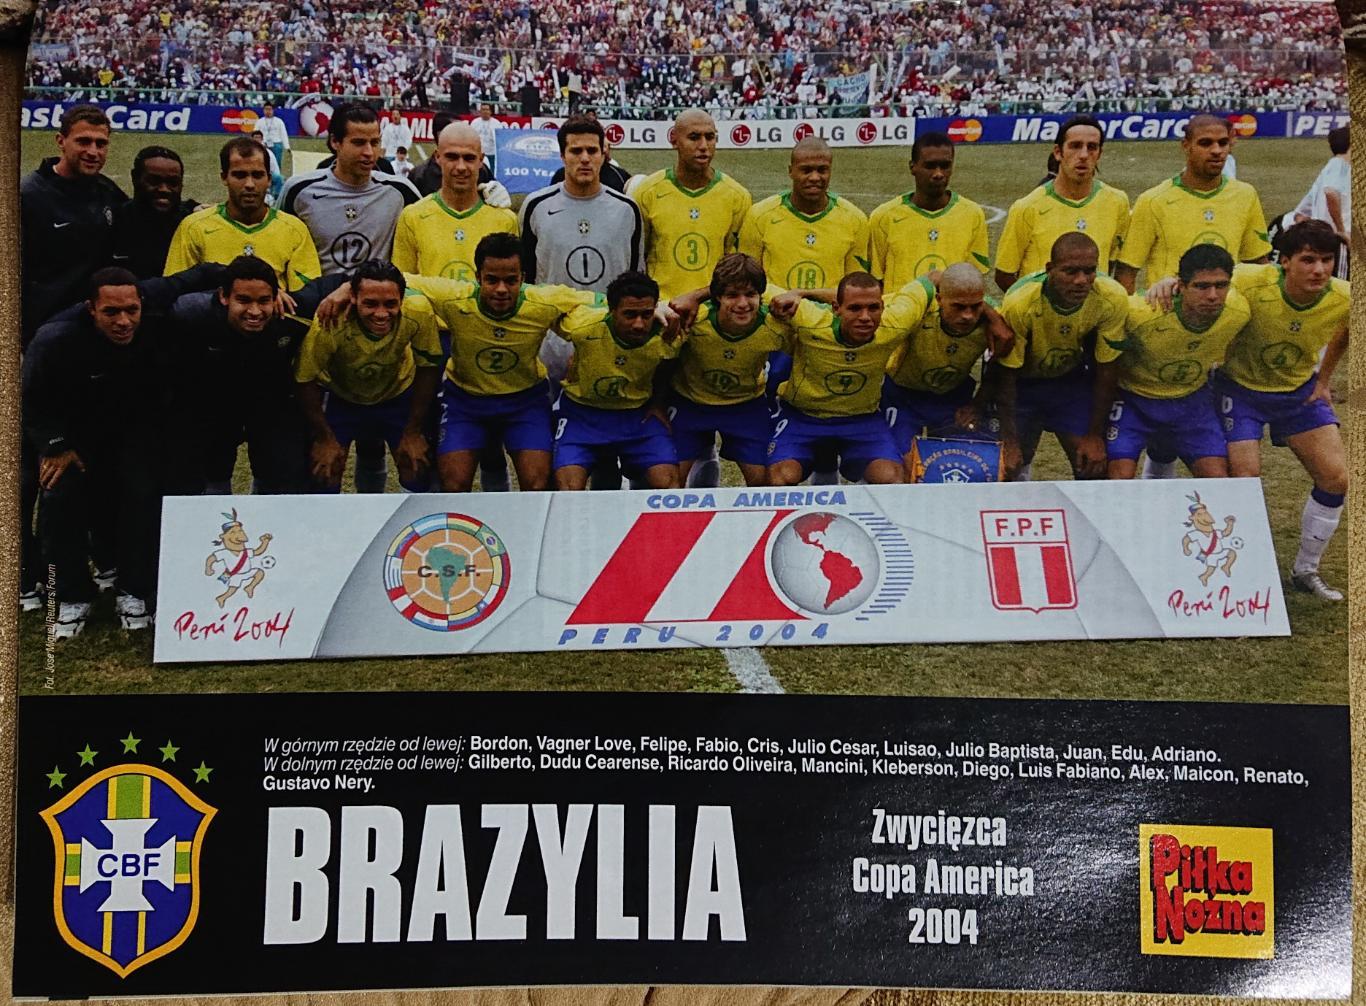 Журнал. Футбол Pilka Nozna N31/2004. Постер Бразилія. 1